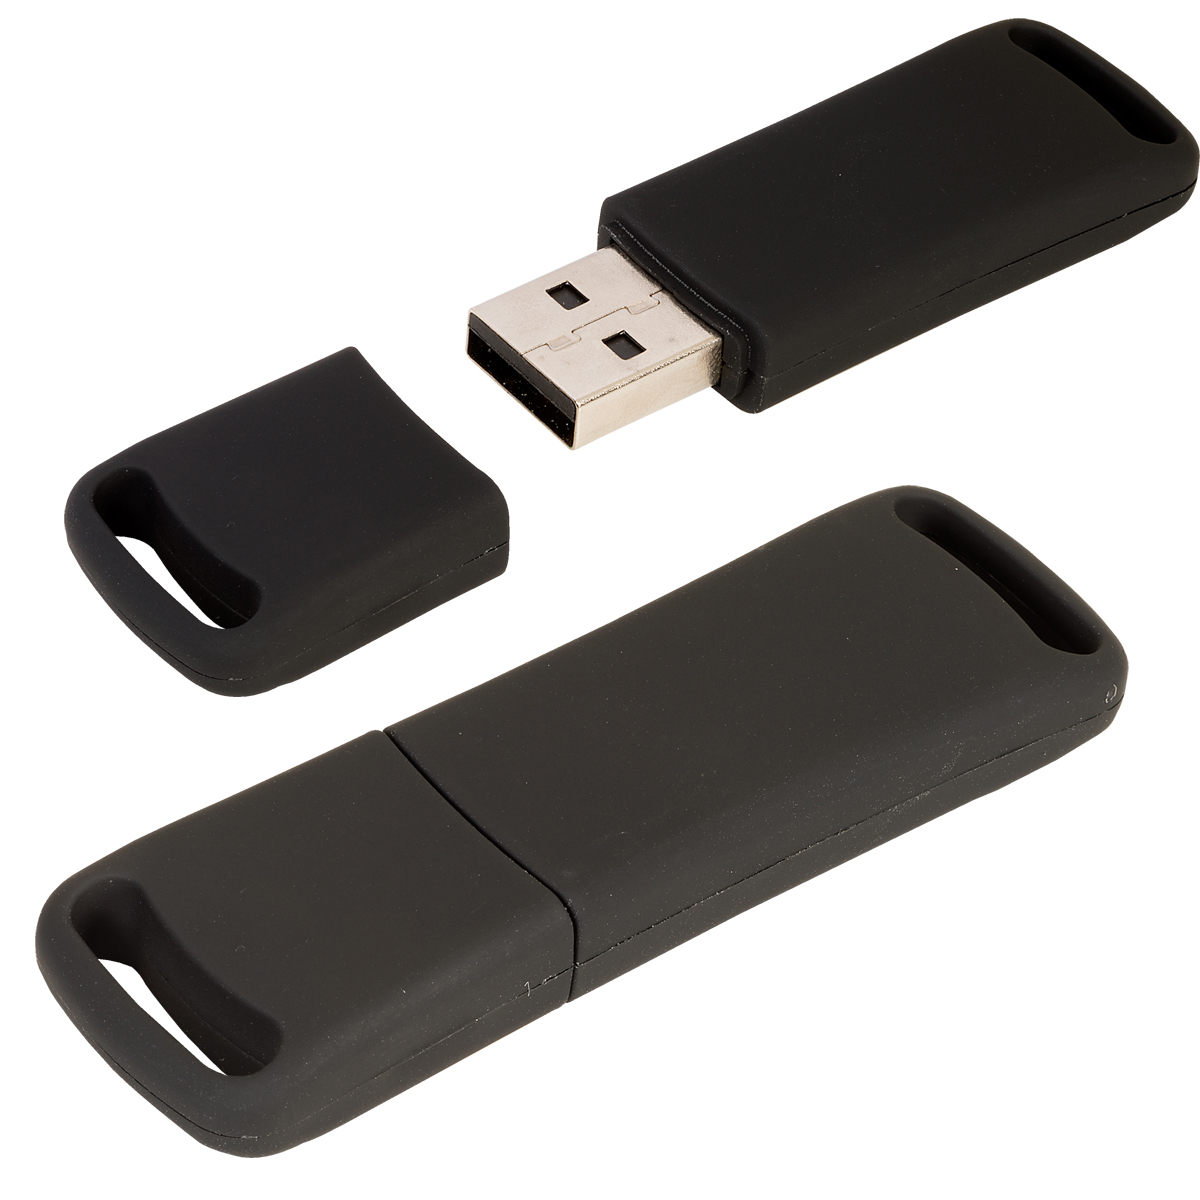 Rubberized USB Memory Flash Drive - 8GB